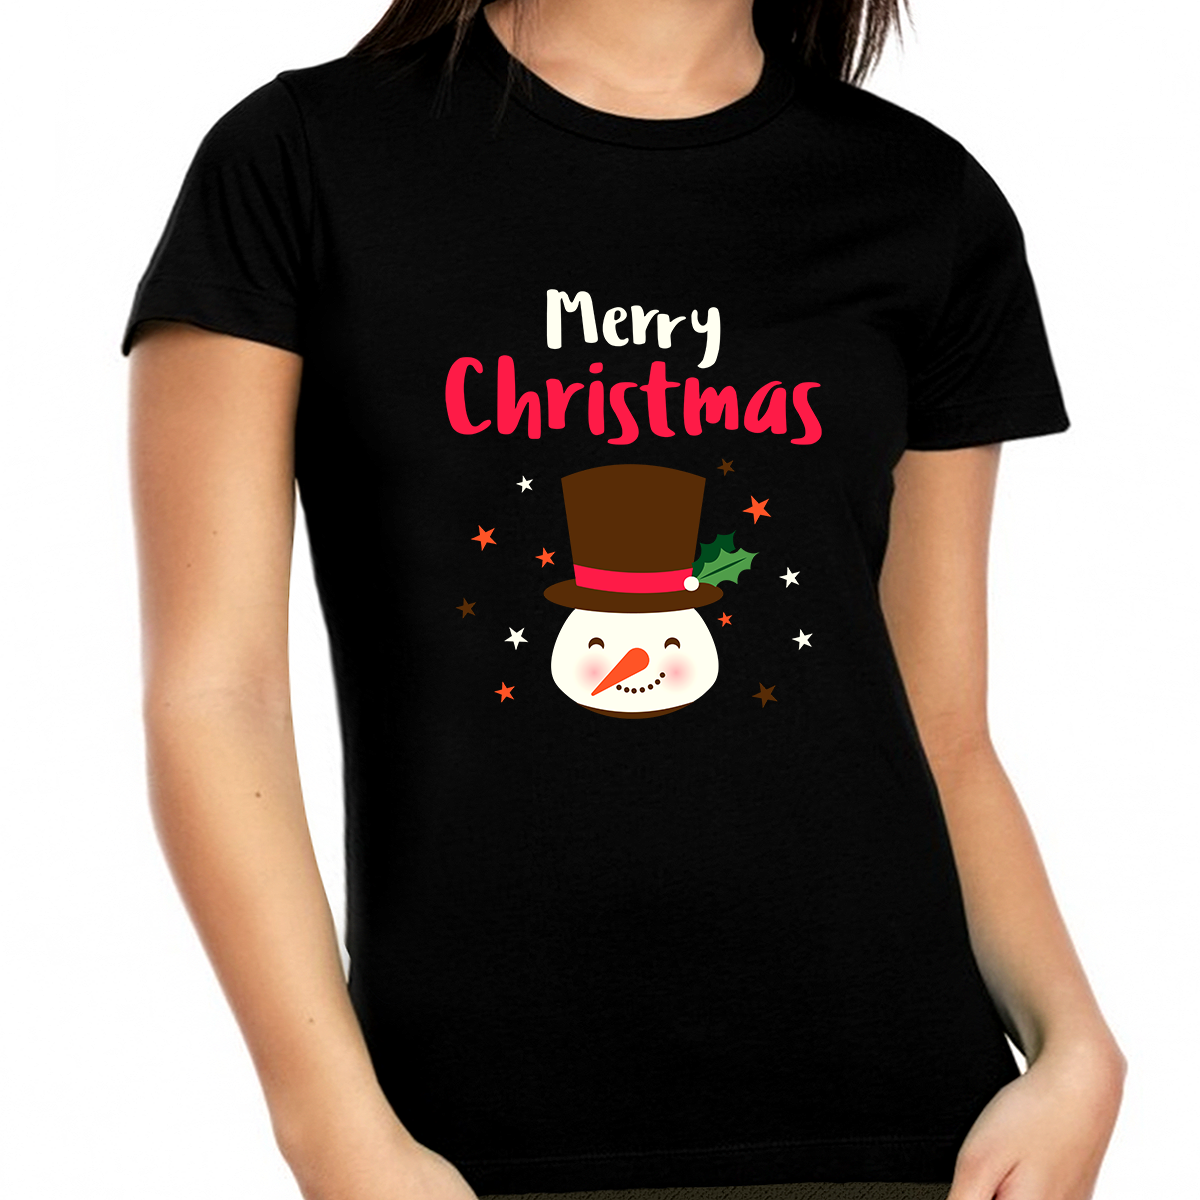 Snowman Christmas Shirt Womens Plus Size Christmas Pajamas for Women Plus Size Christmas Tops for Women